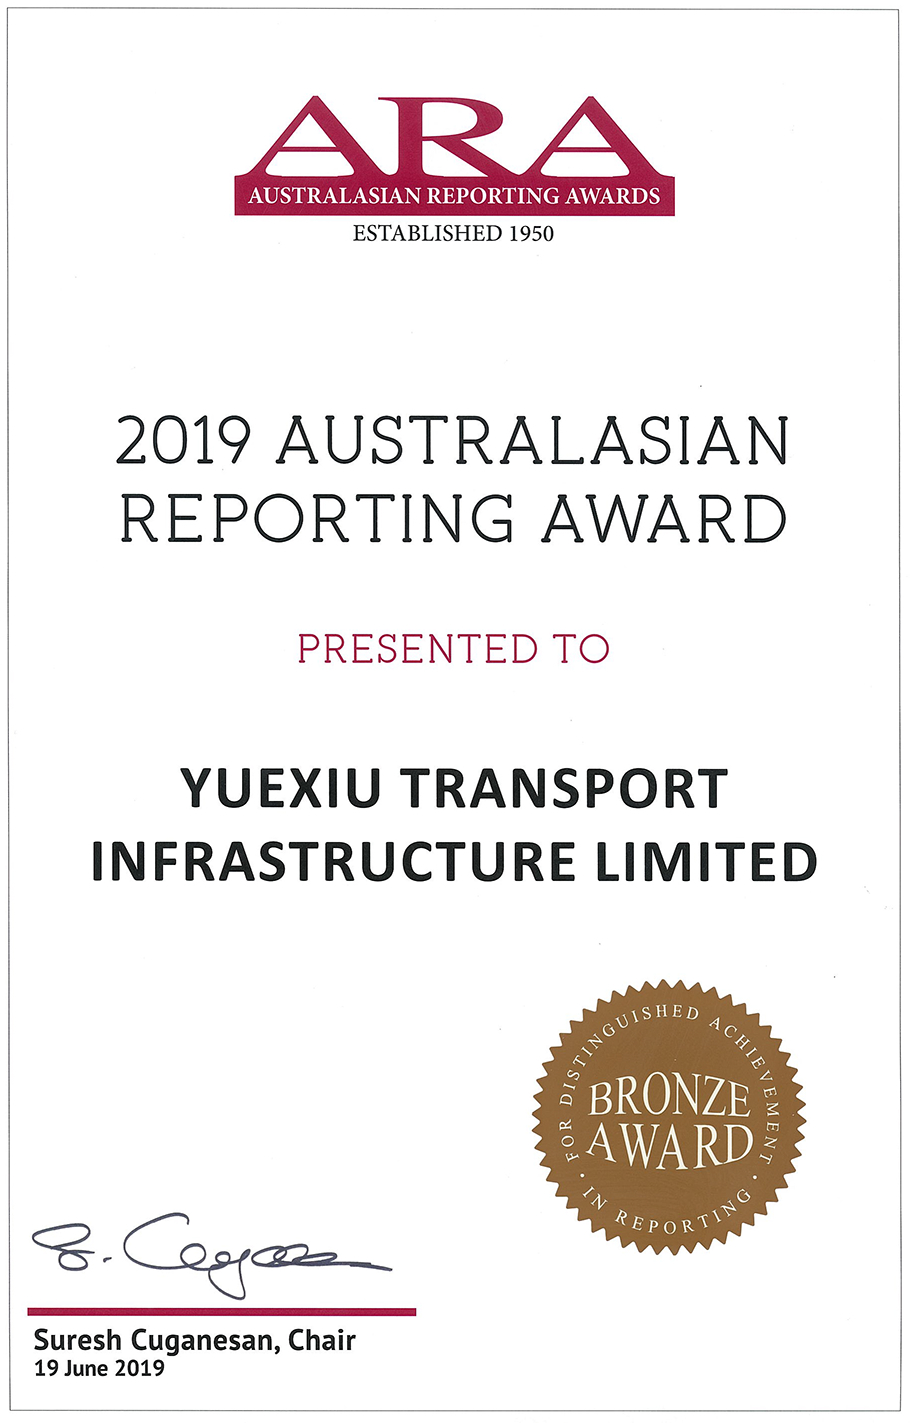 YUEXIU TRANSPORT INFRASTRUCTURE LIMITED – 2019 AUSTRALASIAN REPORTING AWARD BRONZE AWARD